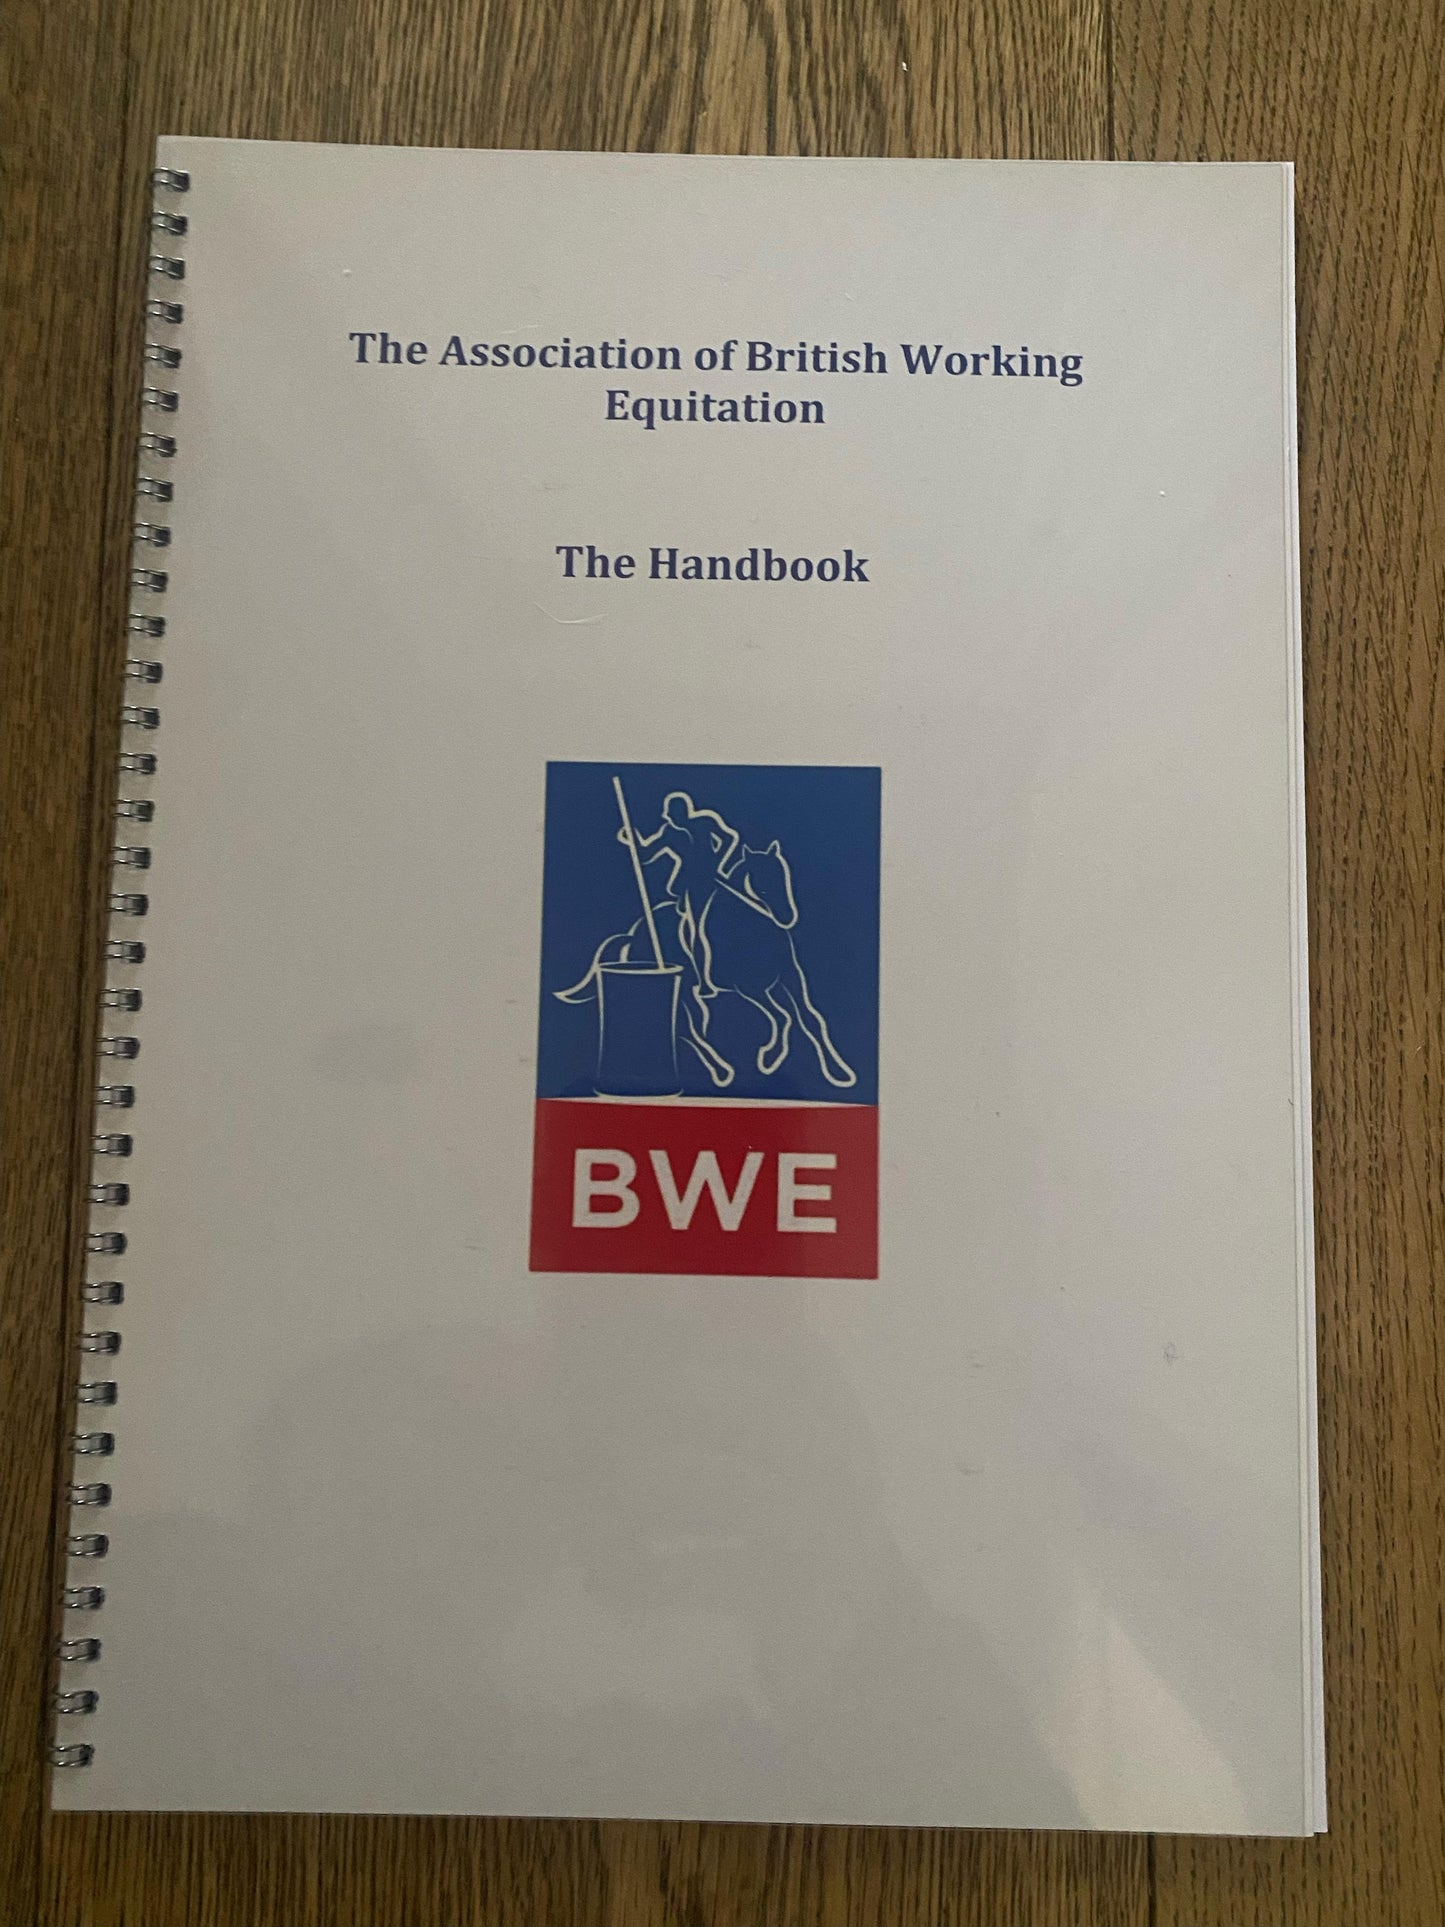 Working Equitation Handbook